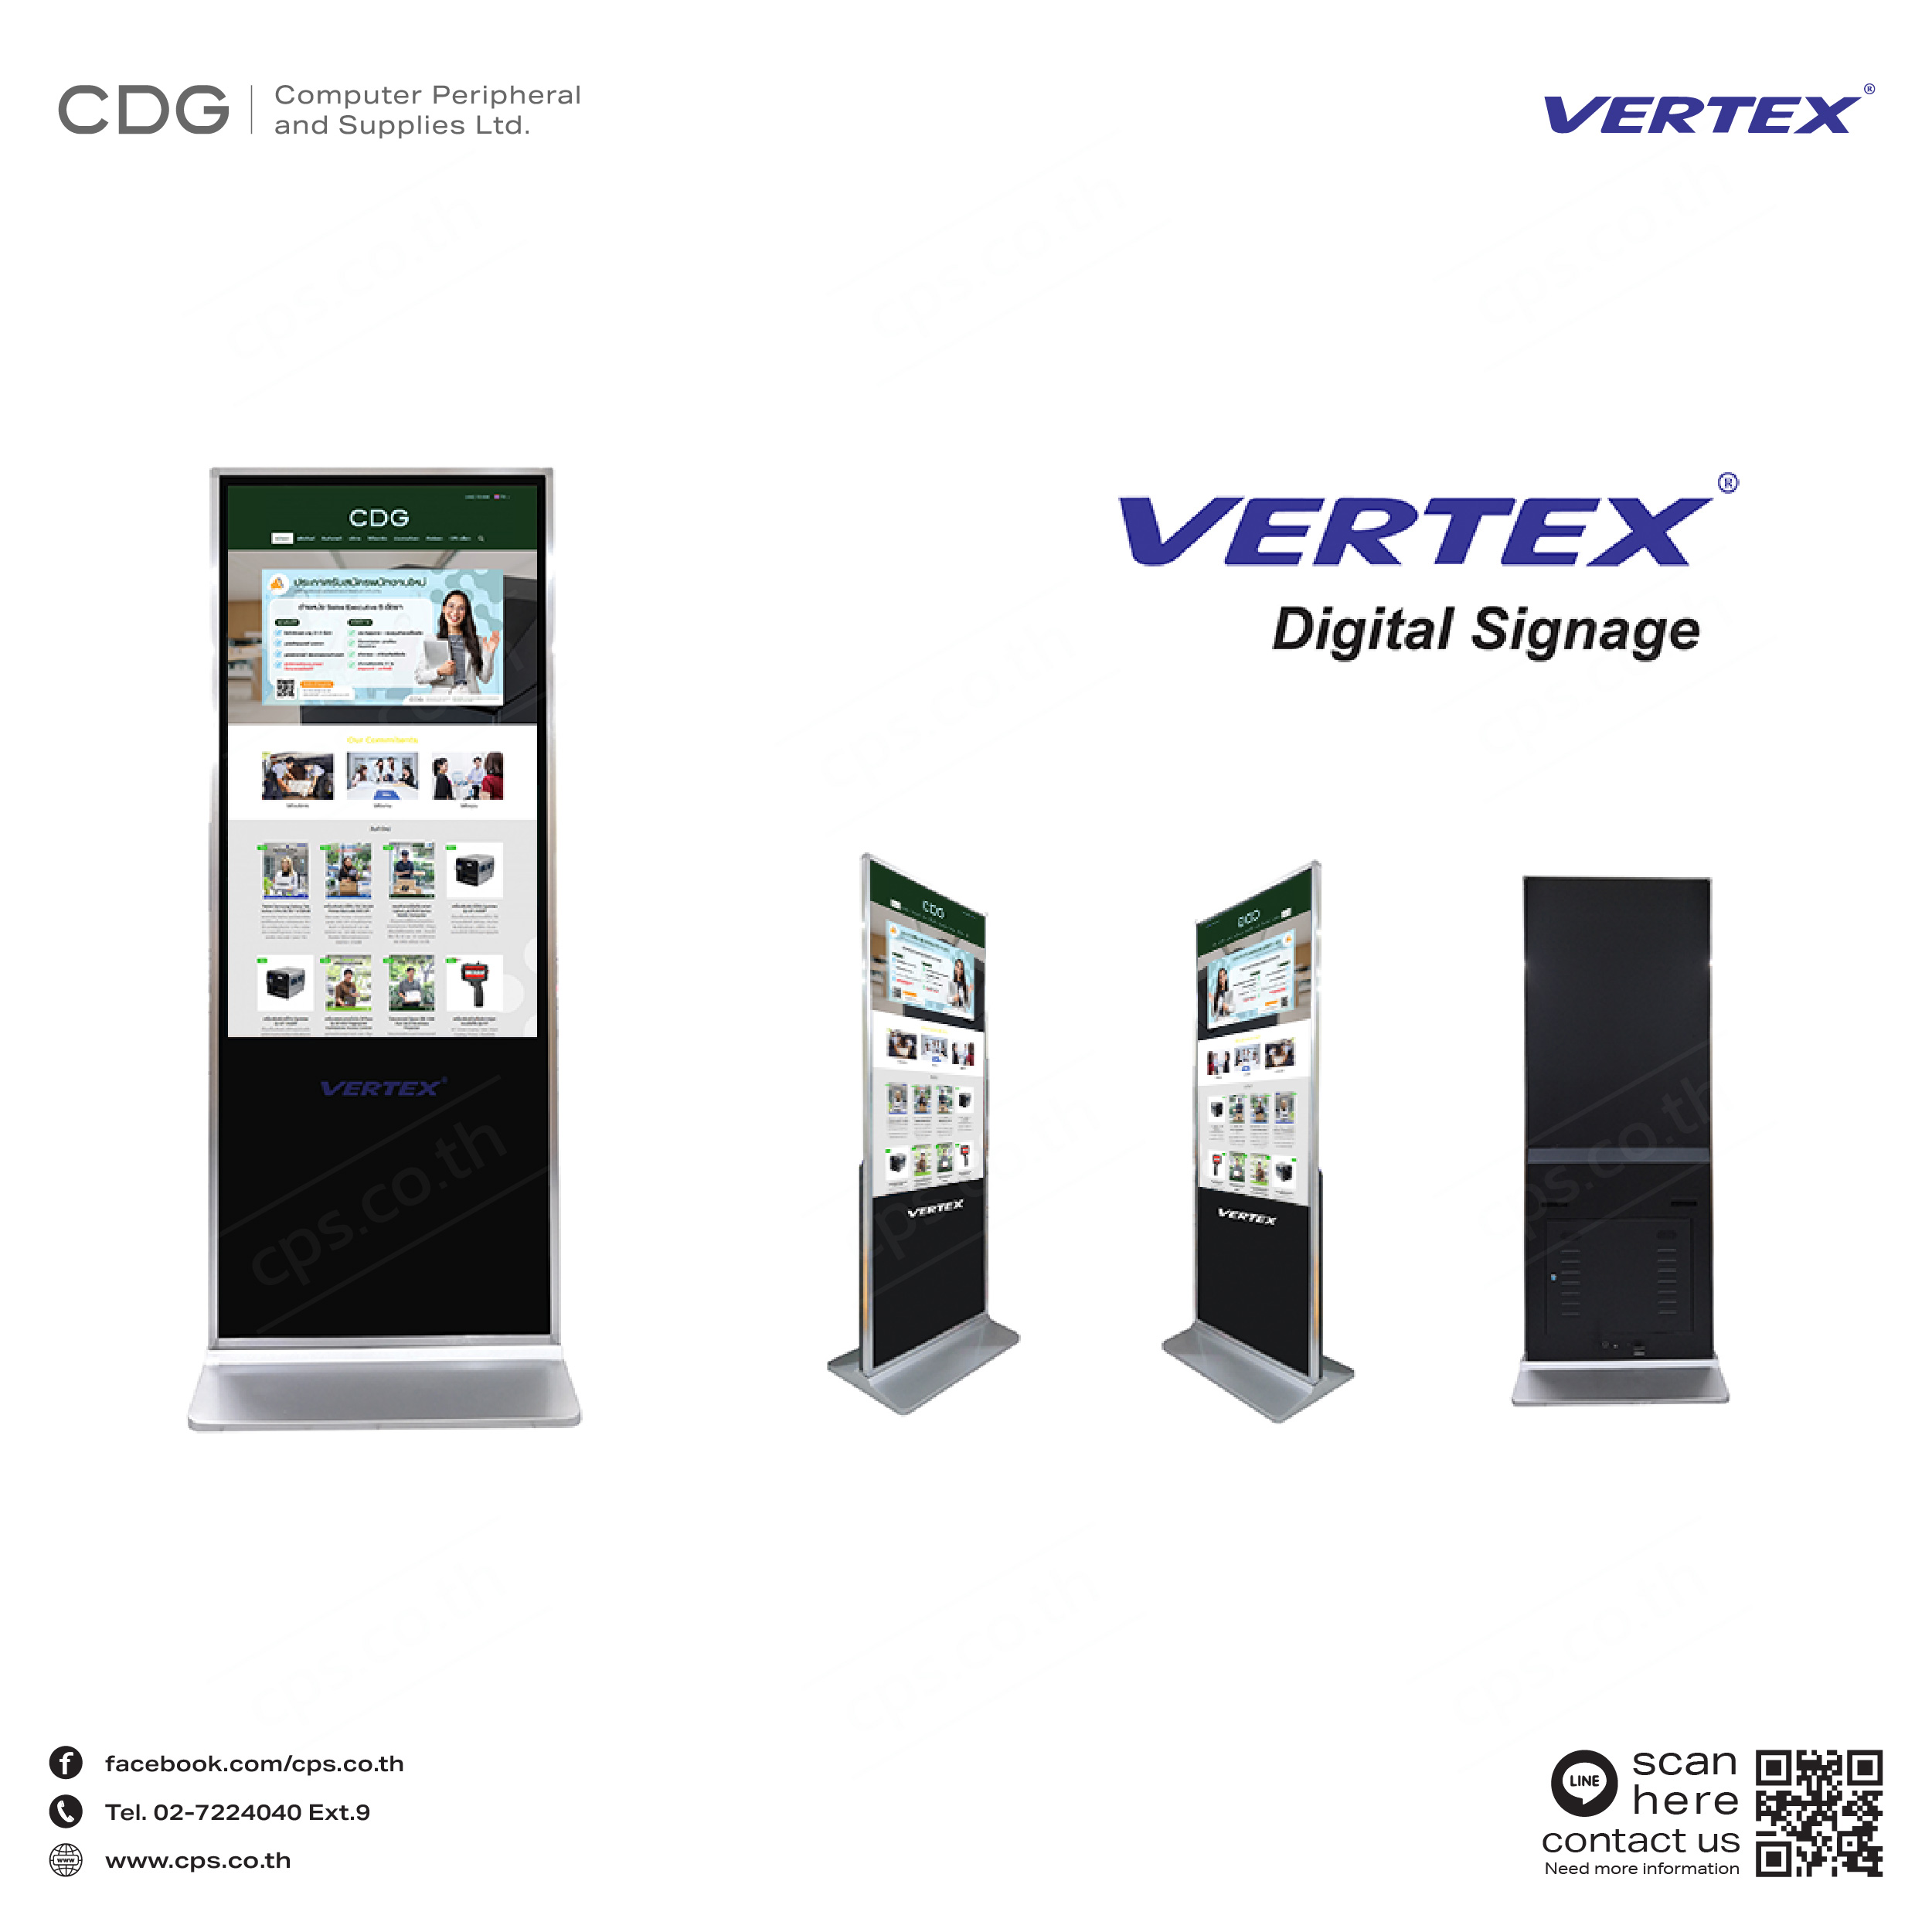 Digital Signage Vertex รุ่น VHD-550N Panel Size 55